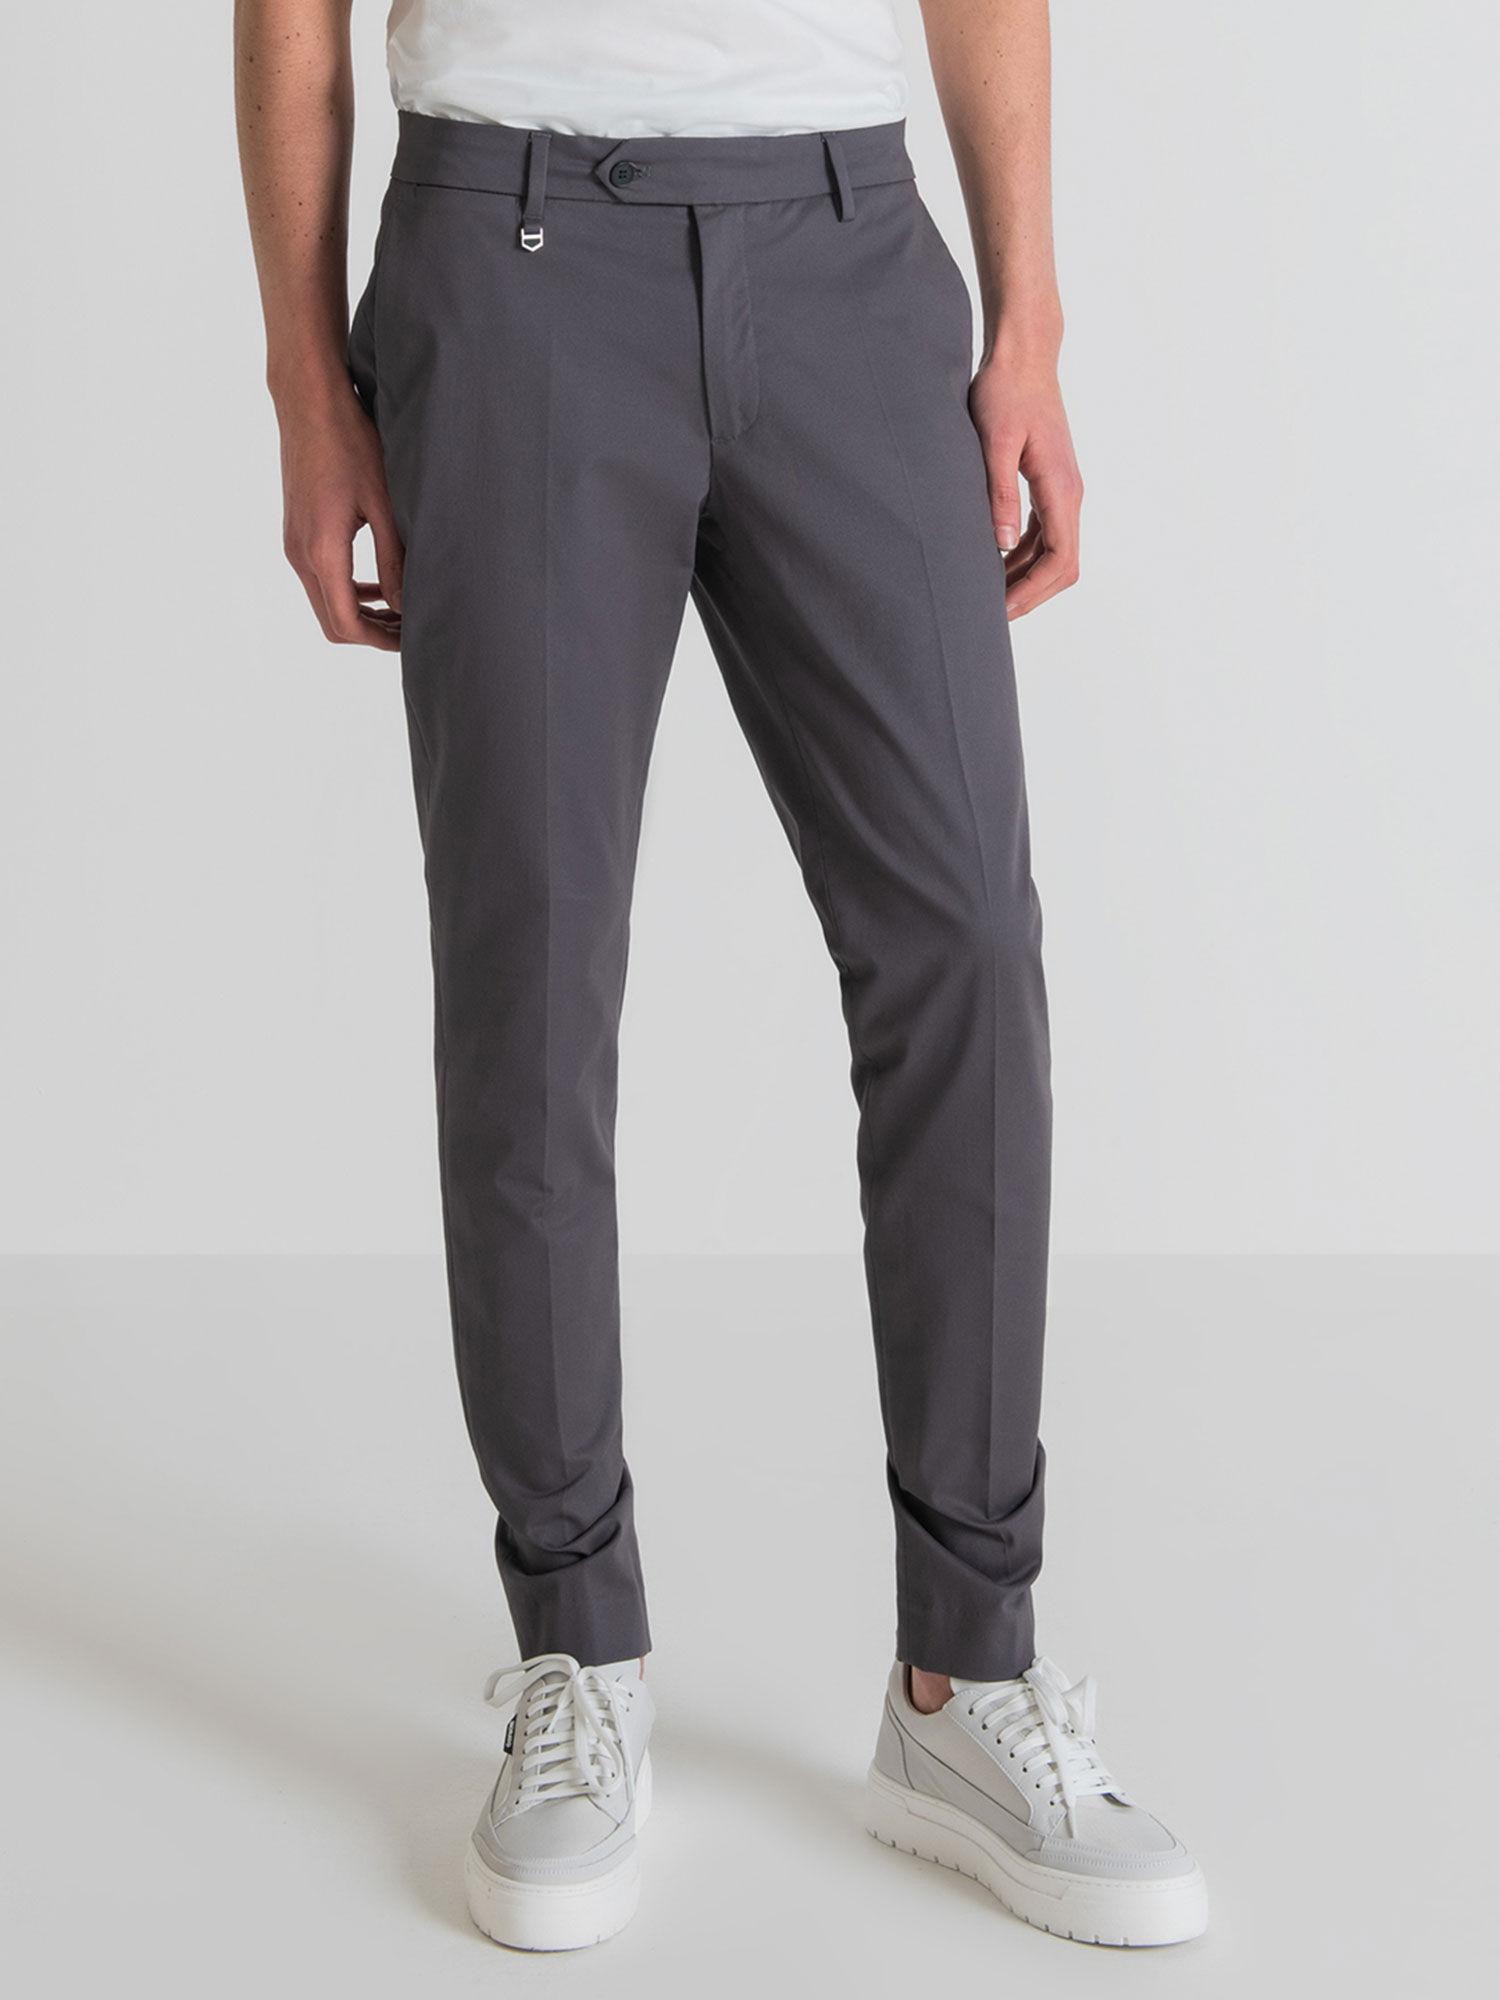 grey trouser